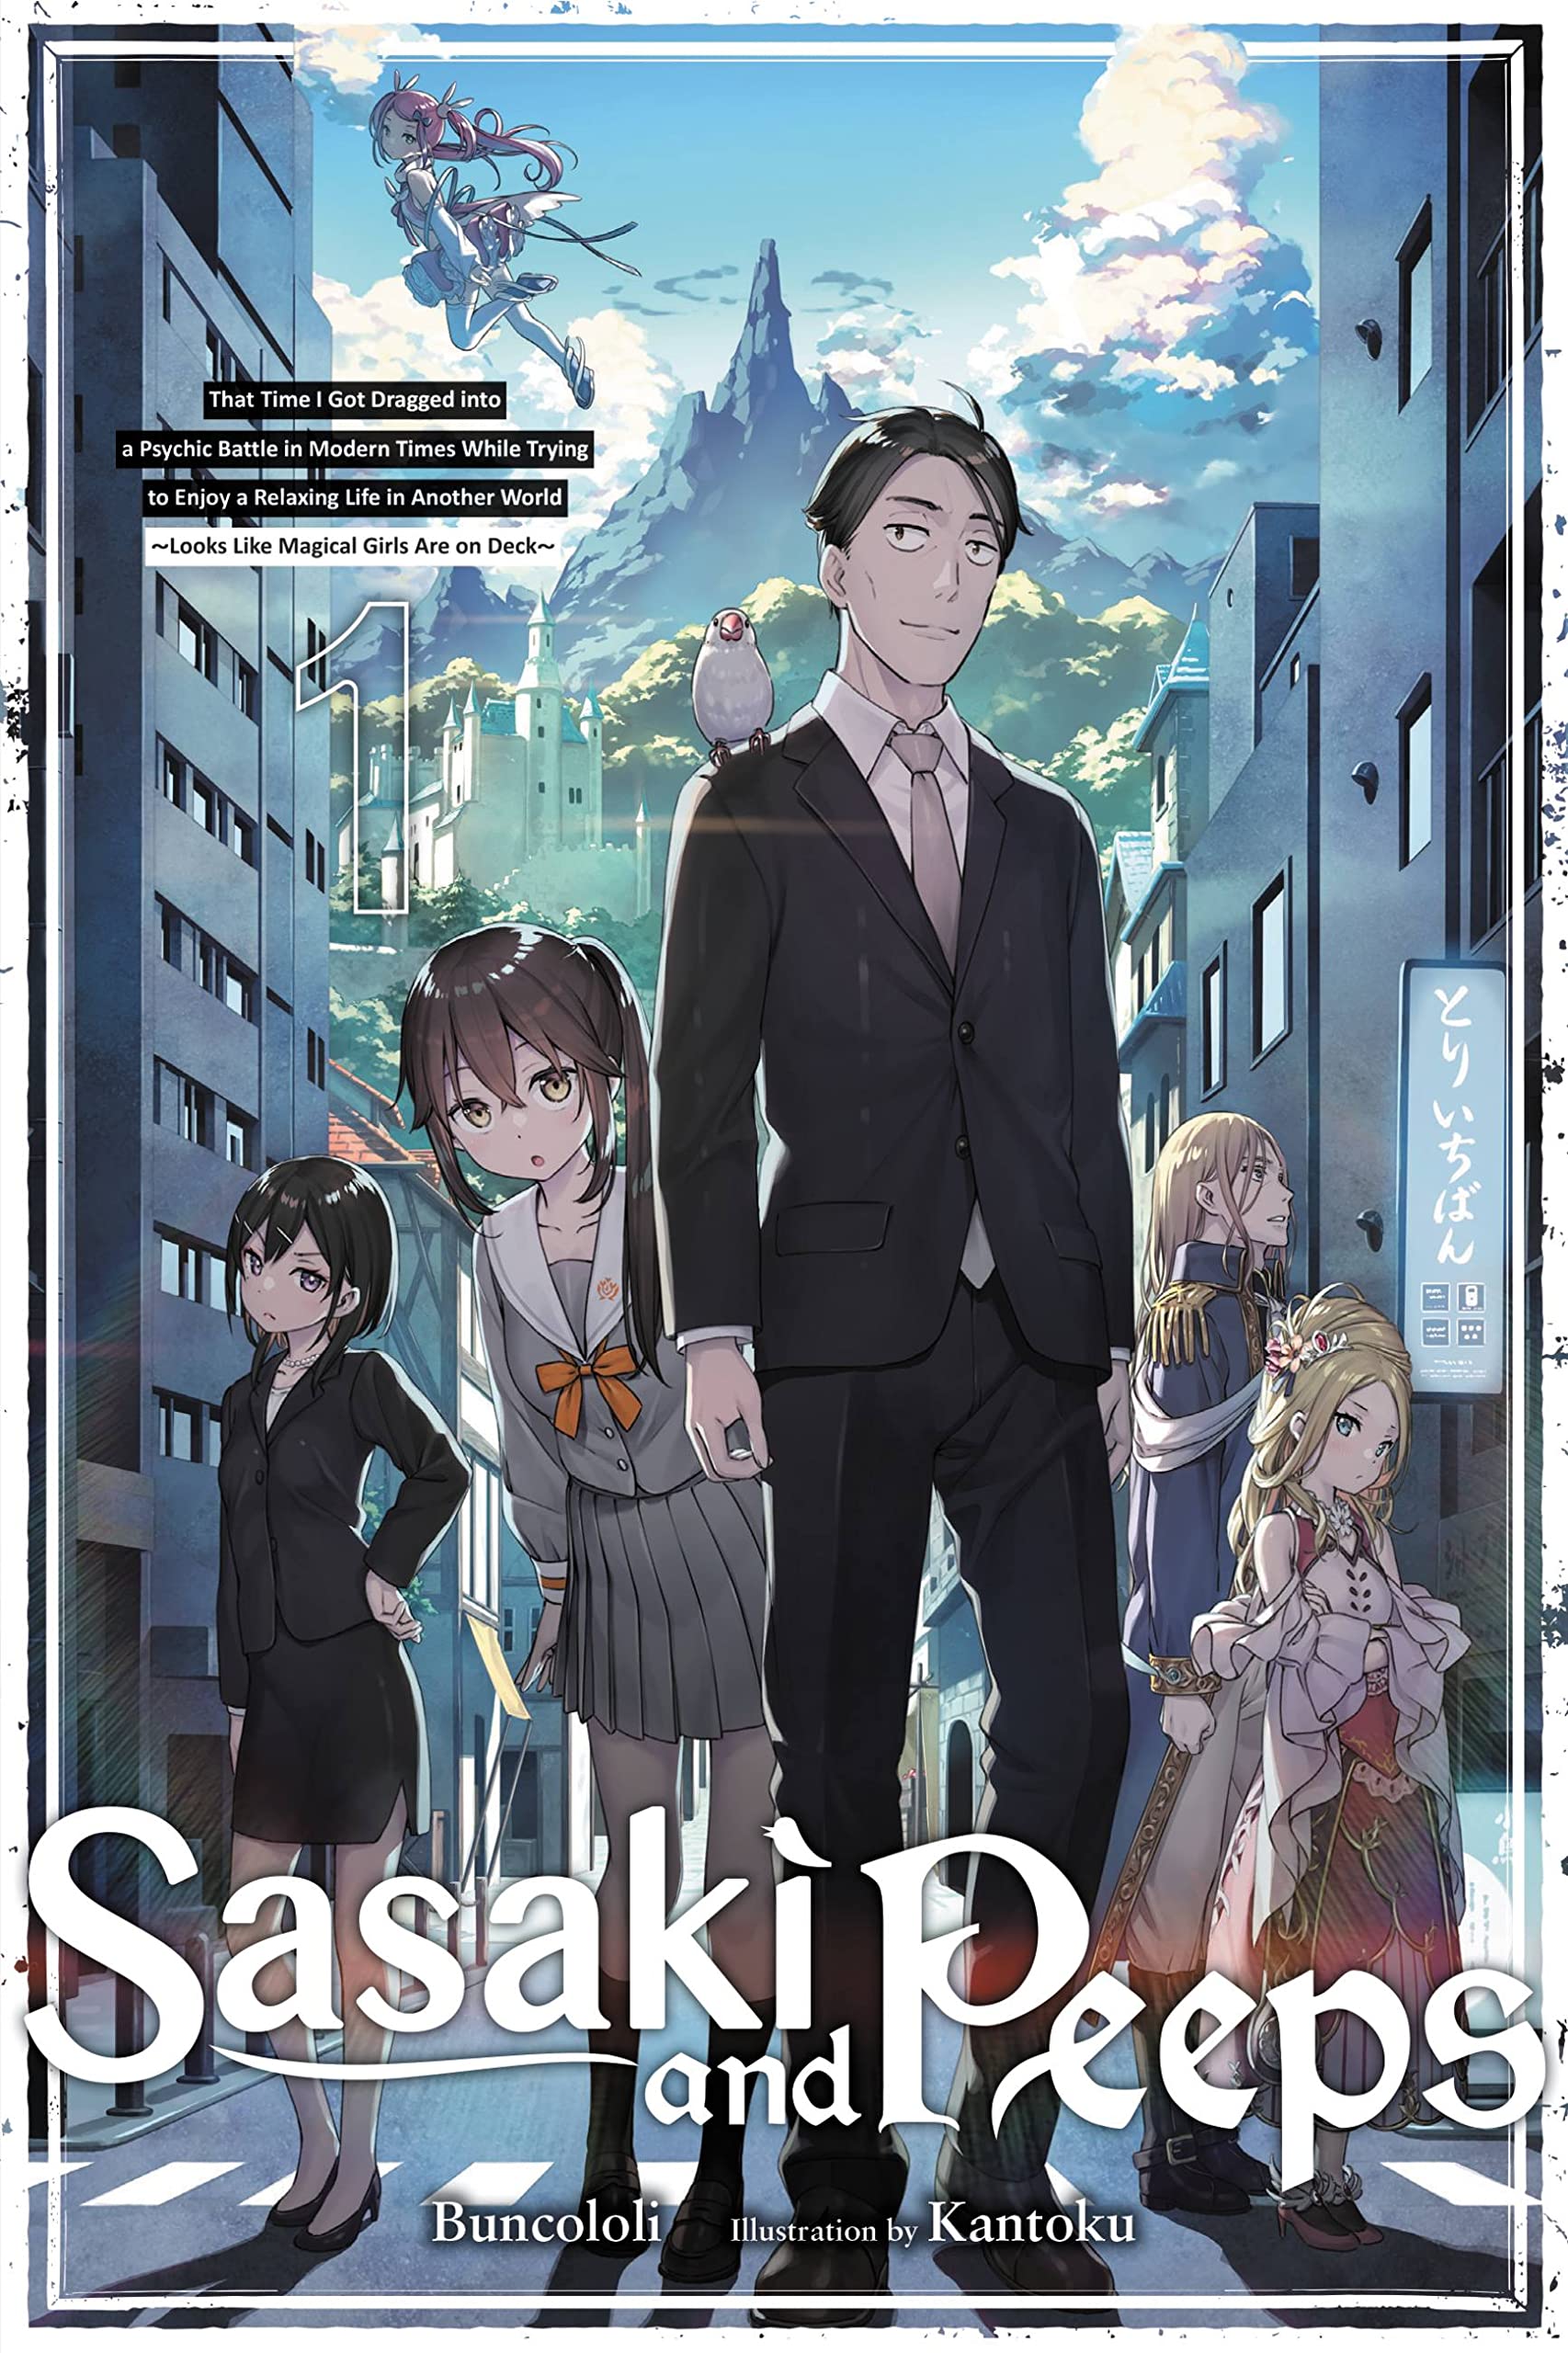 Sasaki and Peeps Fantasy Light Novels Get TV Anime - QooApp News